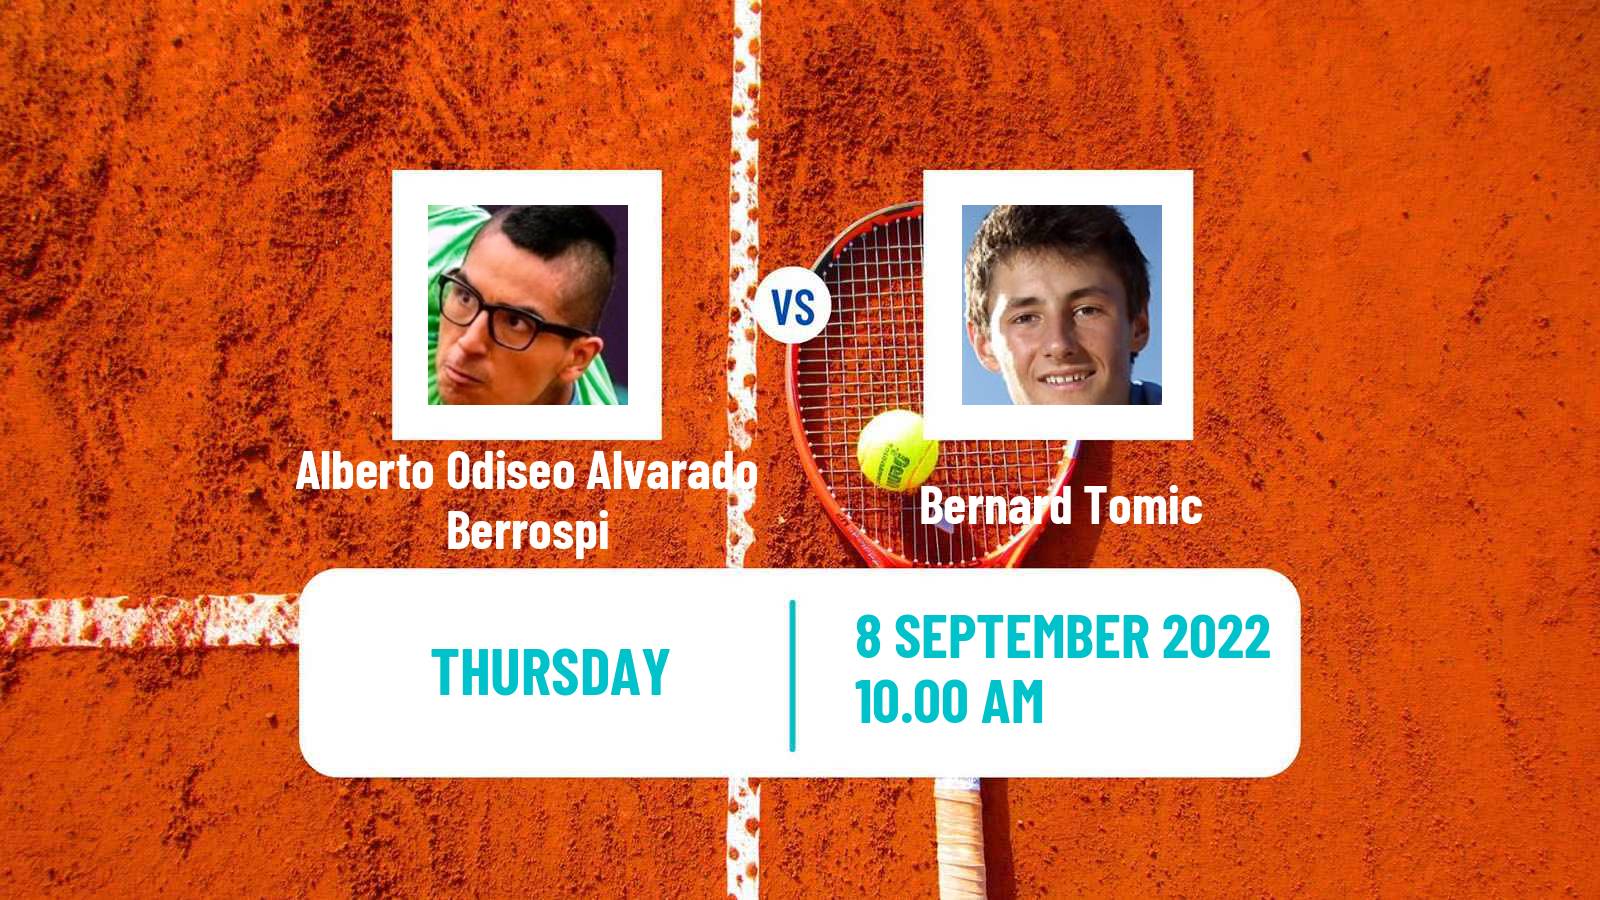 Tennis ITF Tournaments Alberto Odiseo Alvarado Berrospi - Bernard Tomic